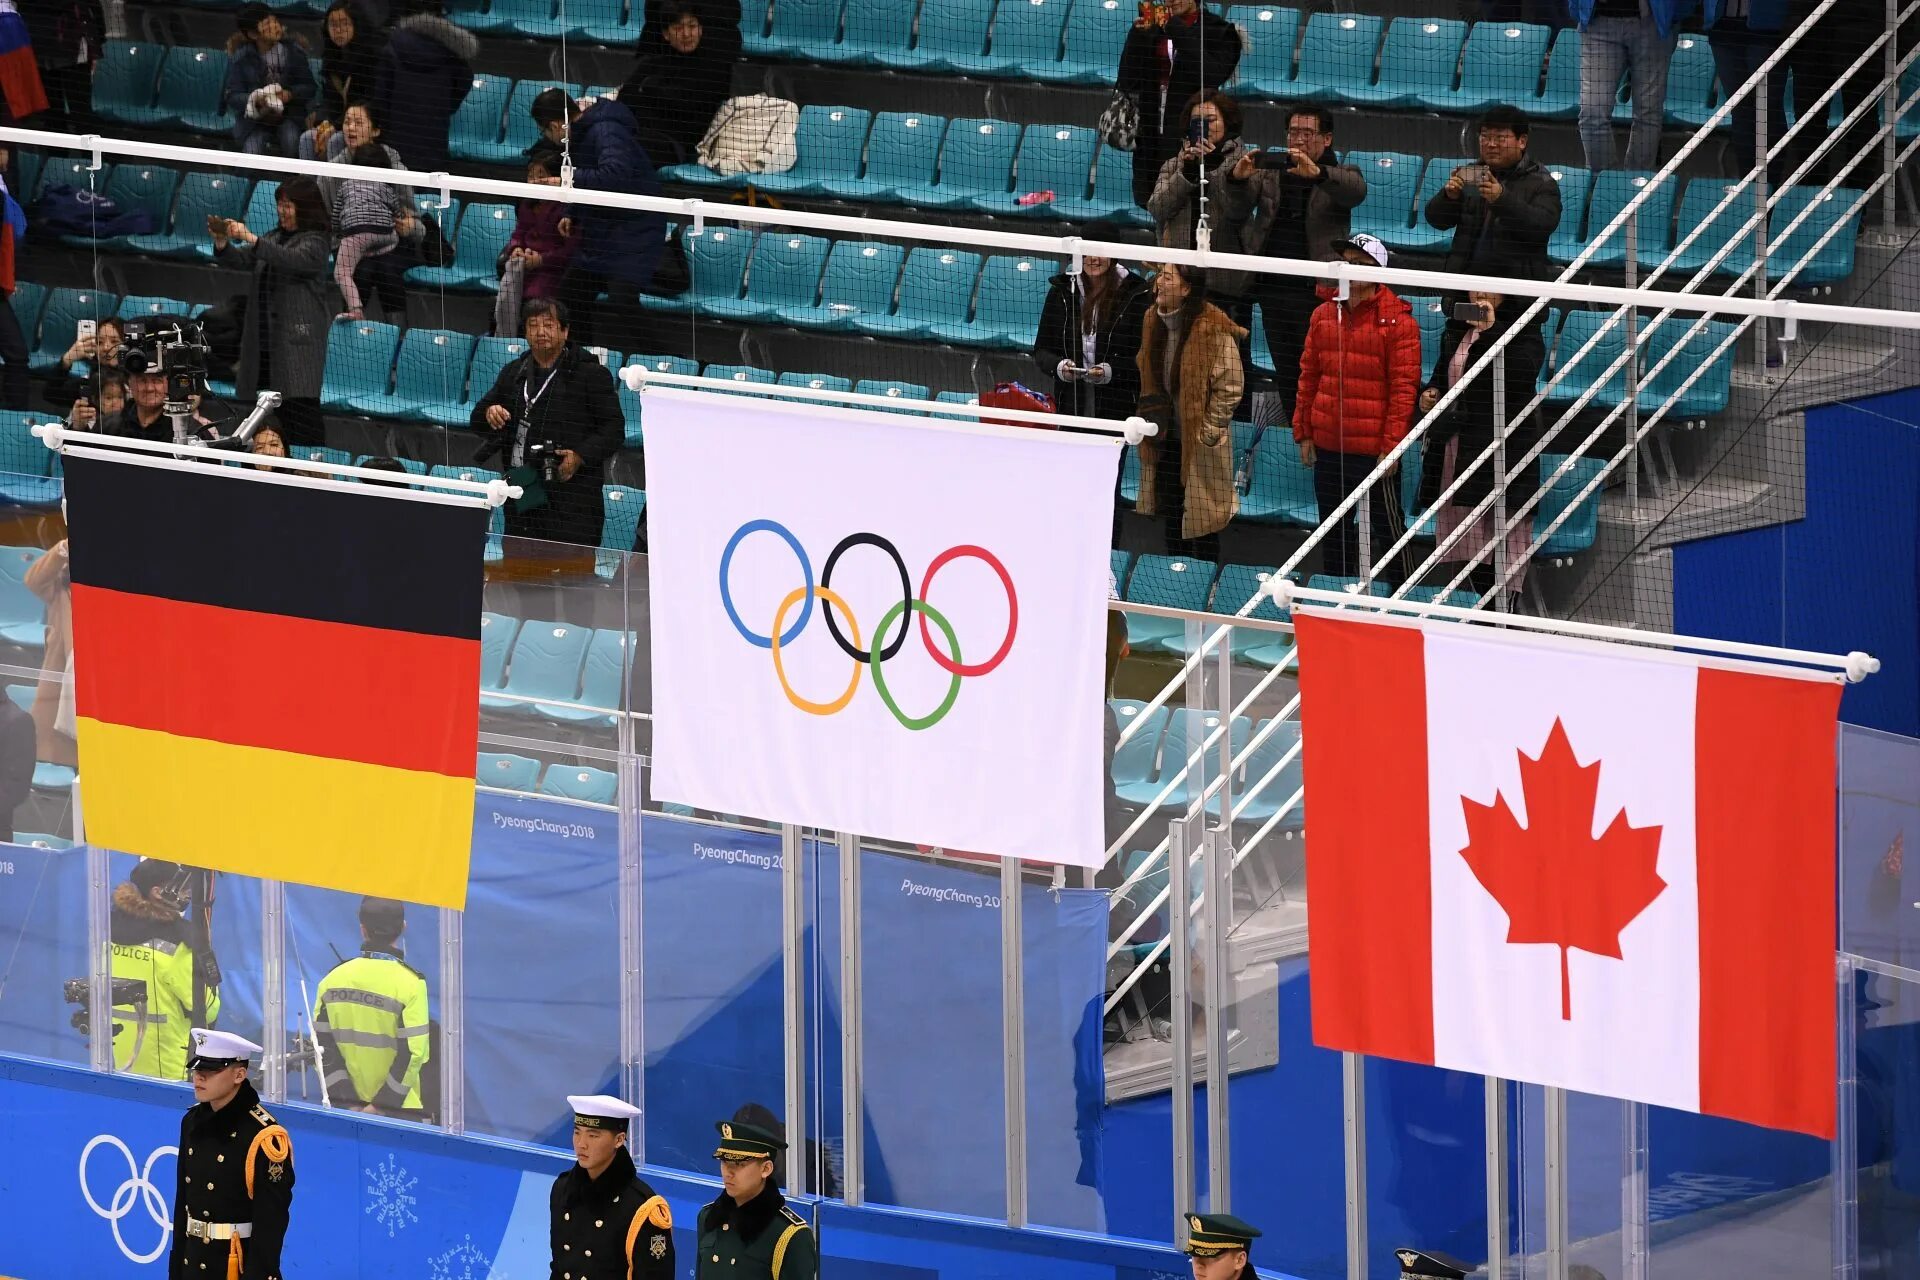 Флаг на церемонии. Флаг Олимпийских игр. Флаг олимпиады. Российская сборная на Олимпиаде в Сочи флаги. Церемония награждения флаг на Олимпиаде.